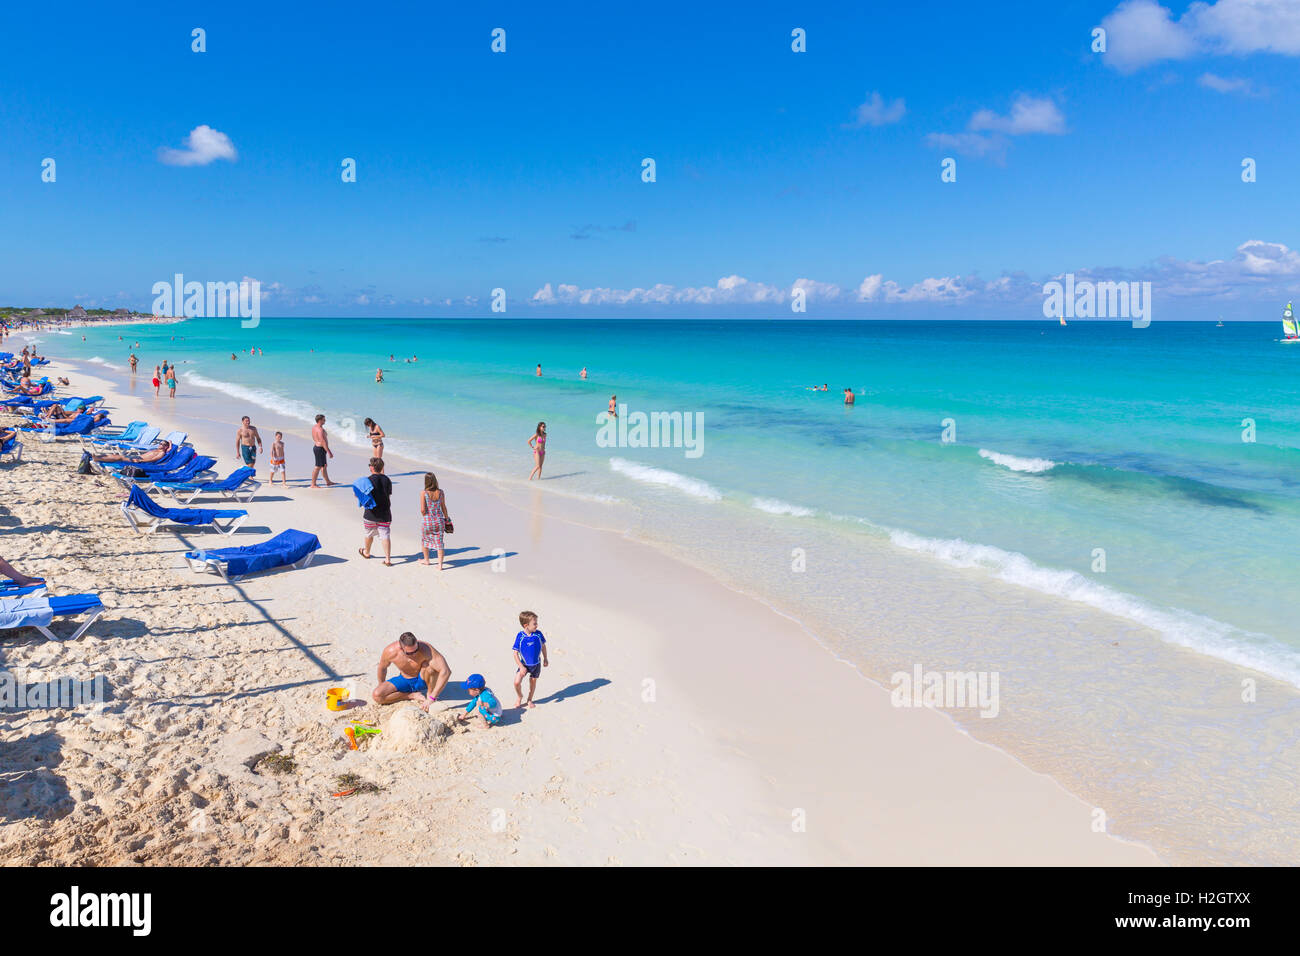 Tourists on the sandy beach with turquoise water, Hotel Melia Las Dunas,  island of Cayo Santa Maria, Caribbean, Cuba Stock Photo - Alamy